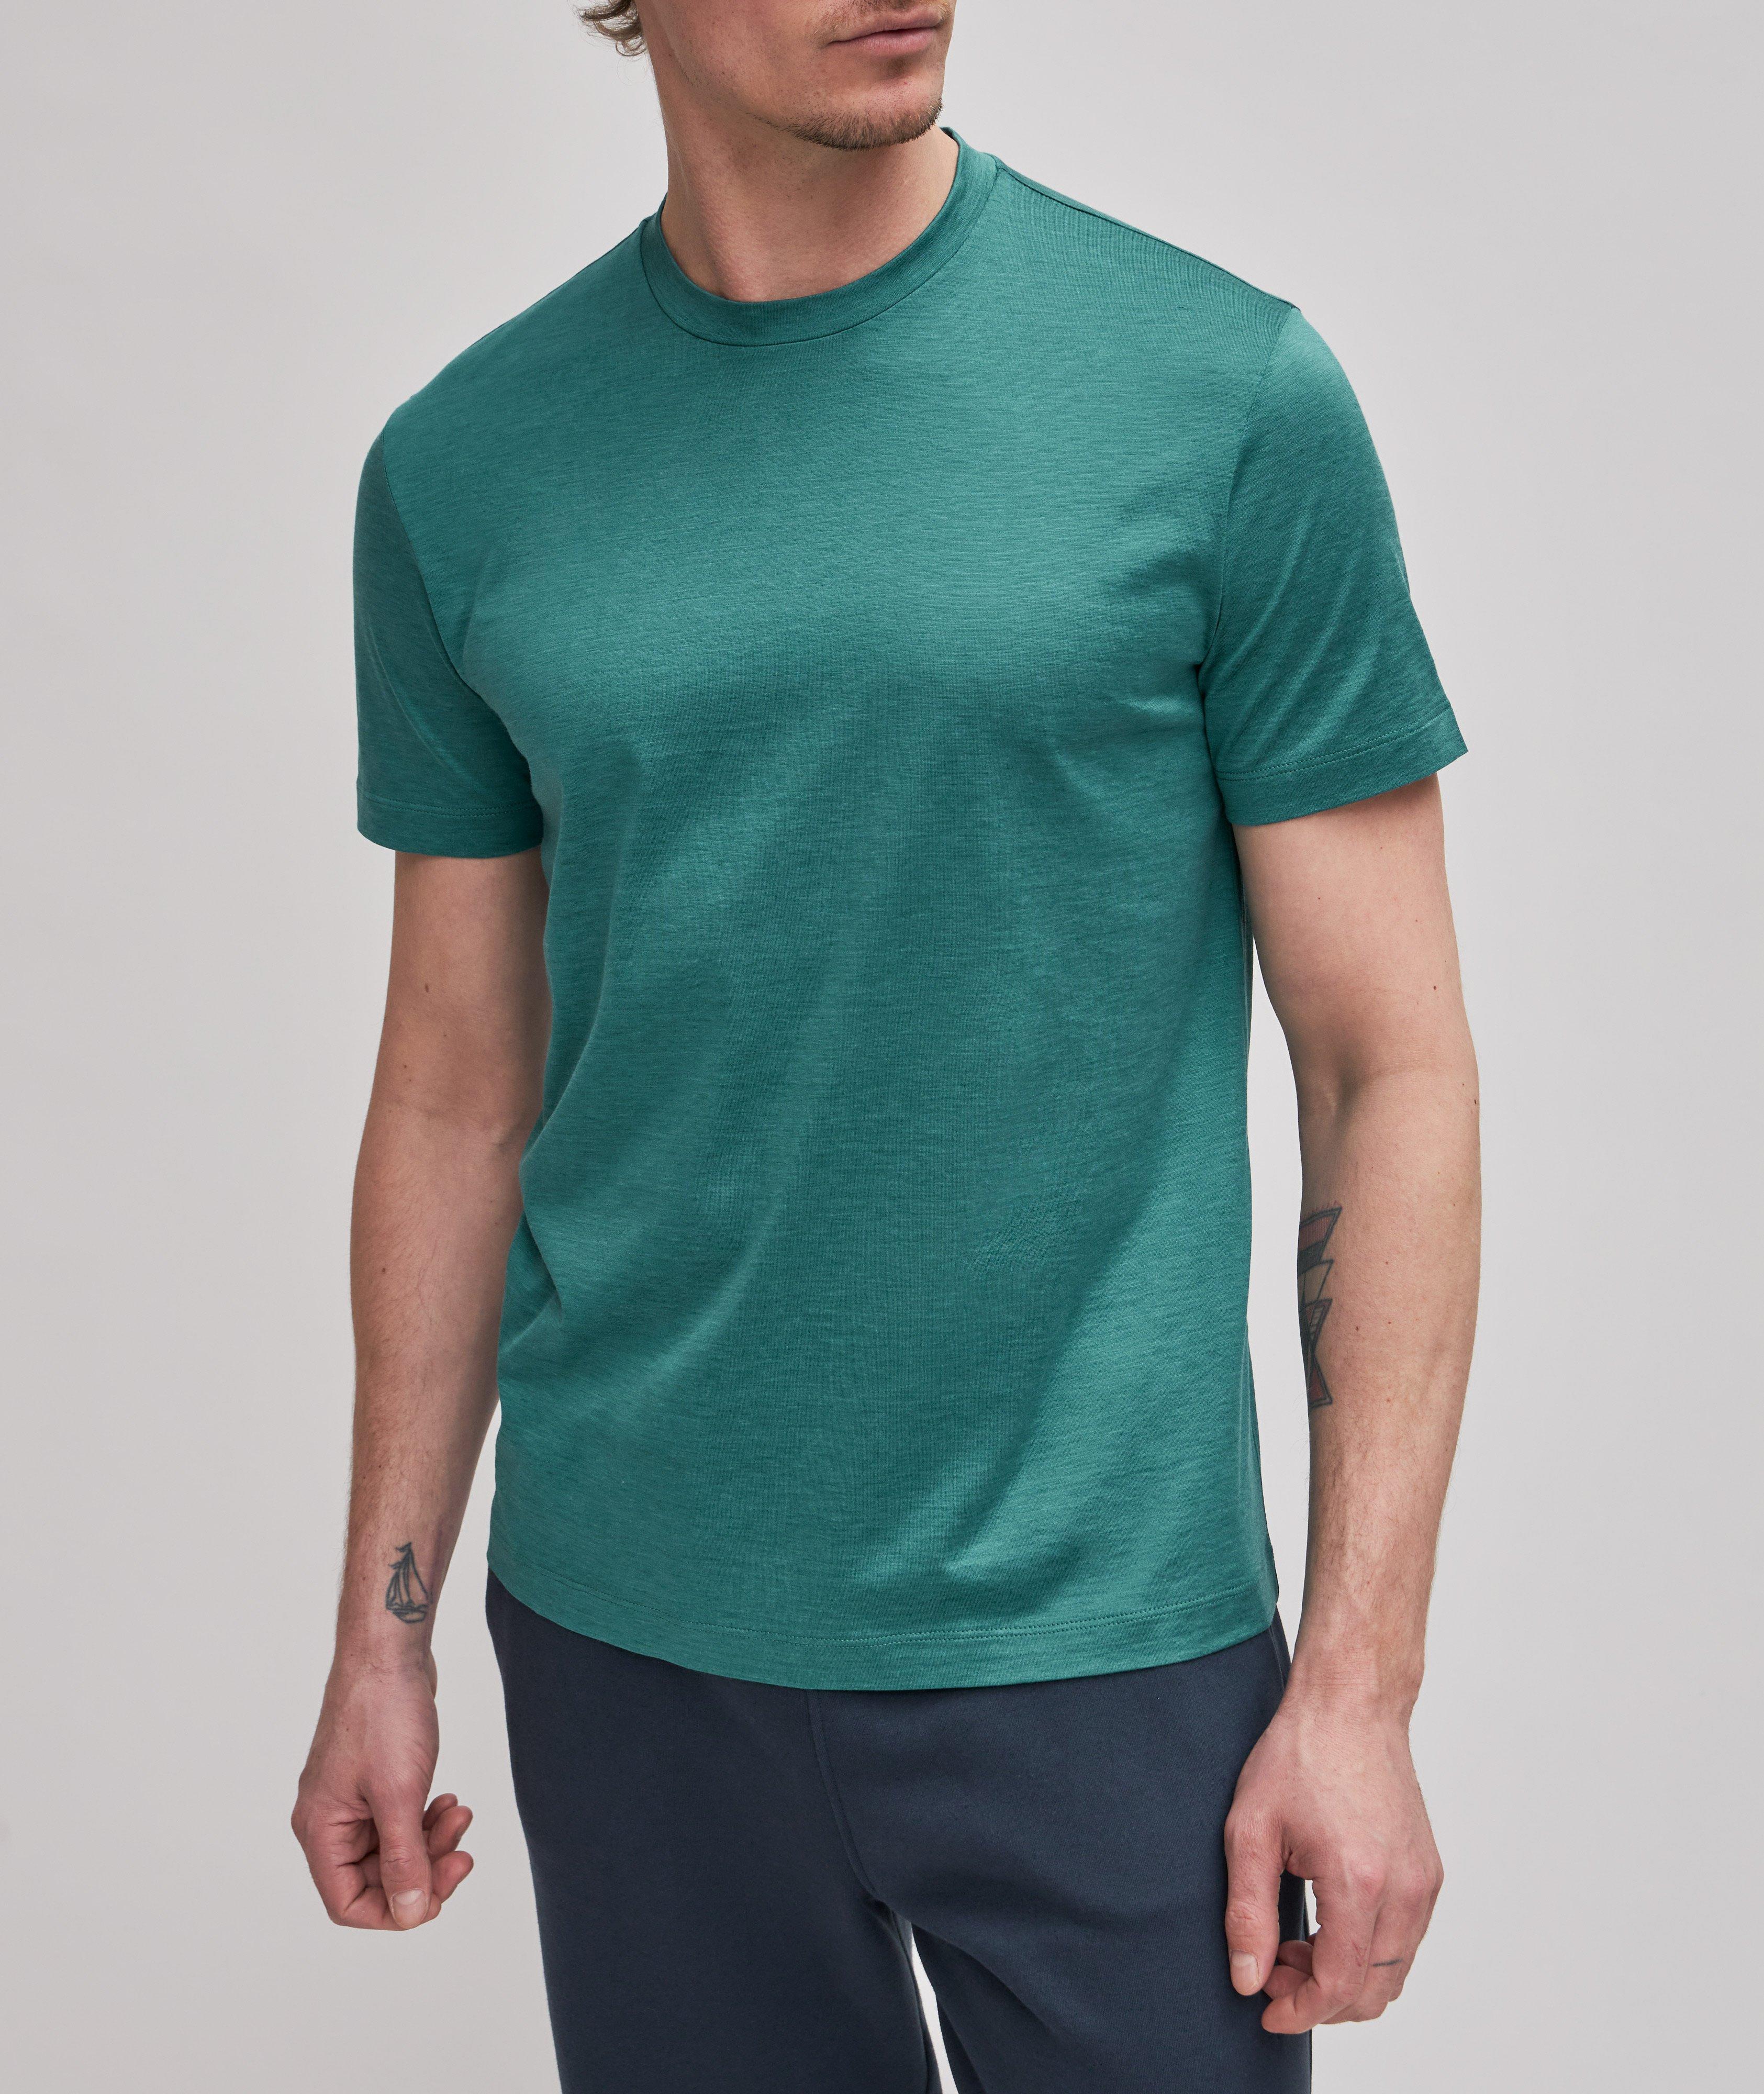 Heathered Silk-Cotton Jersey T-Shirt image 1